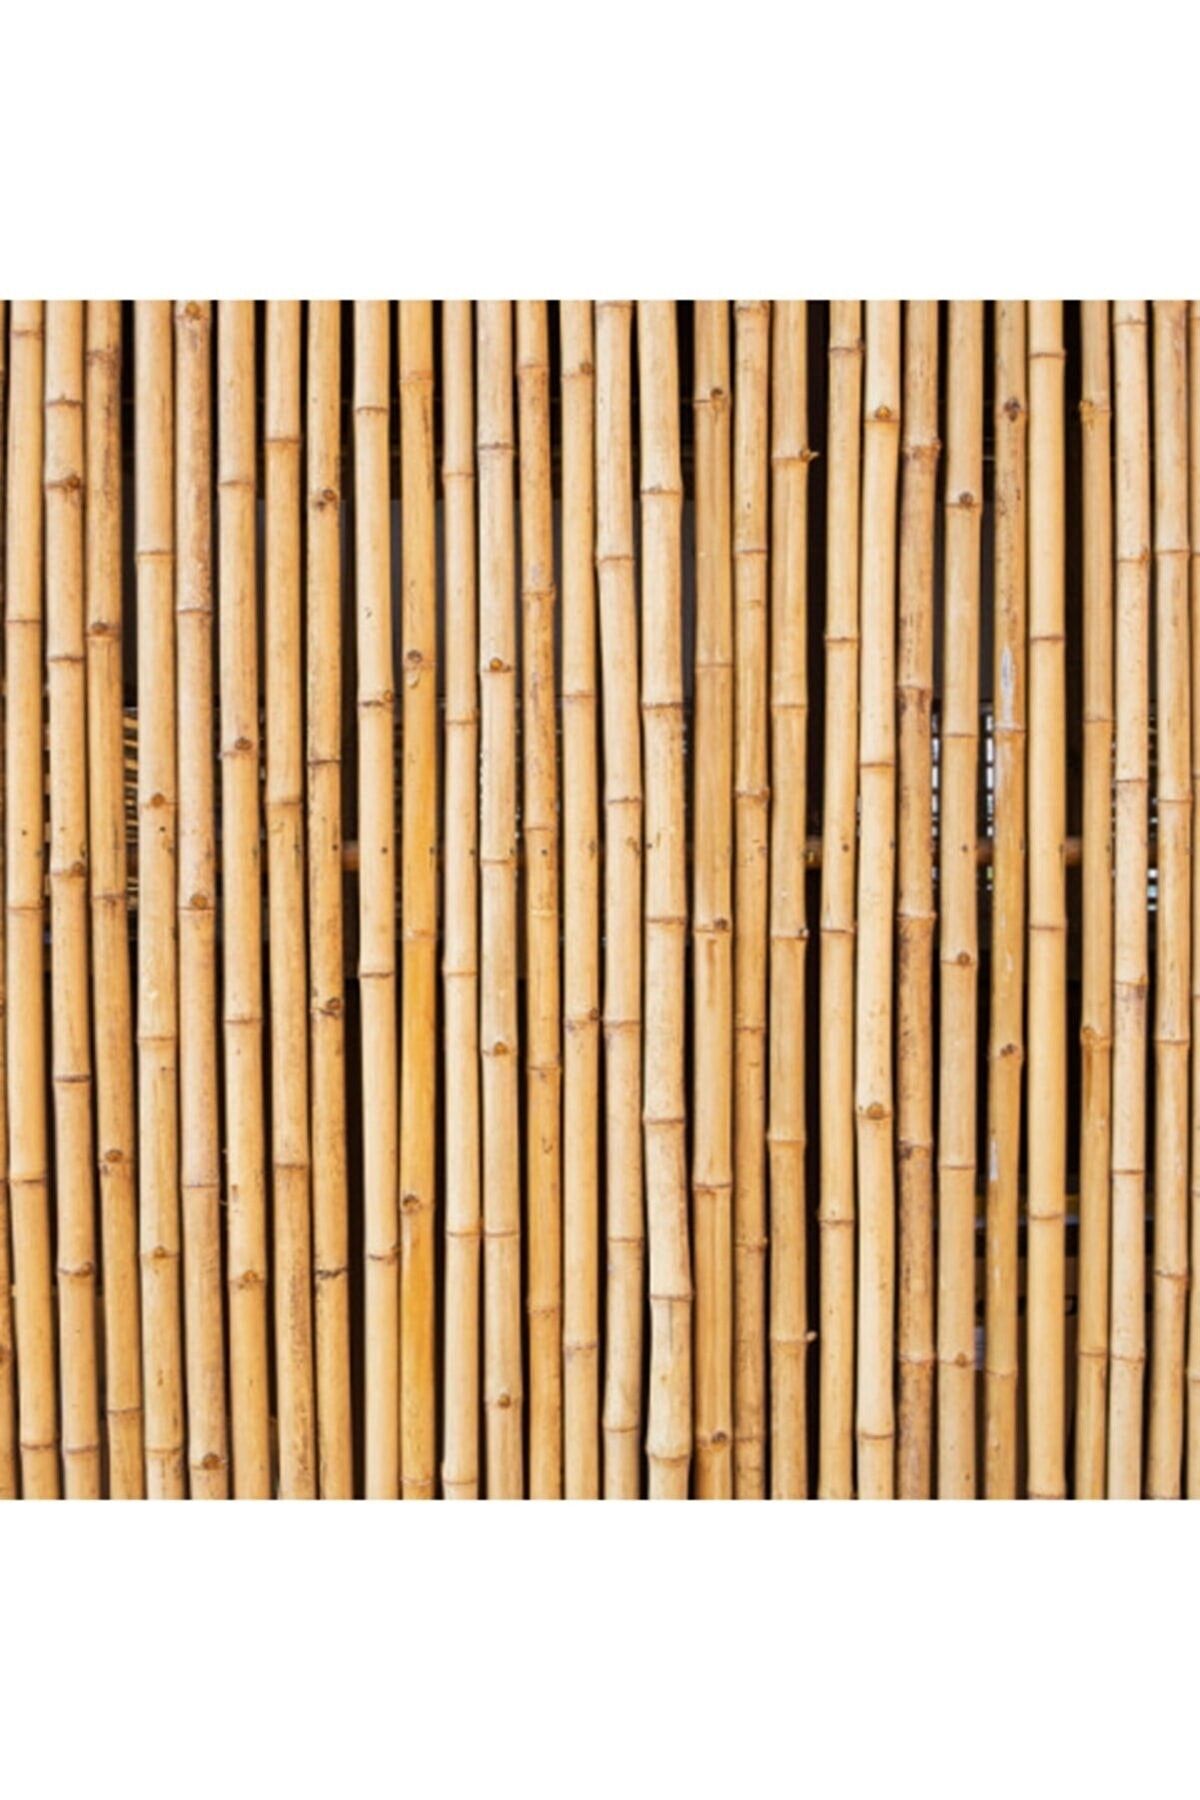 Gardenonya 30 Cm Bambu Bitki Destek Çubuğu 20 Adet